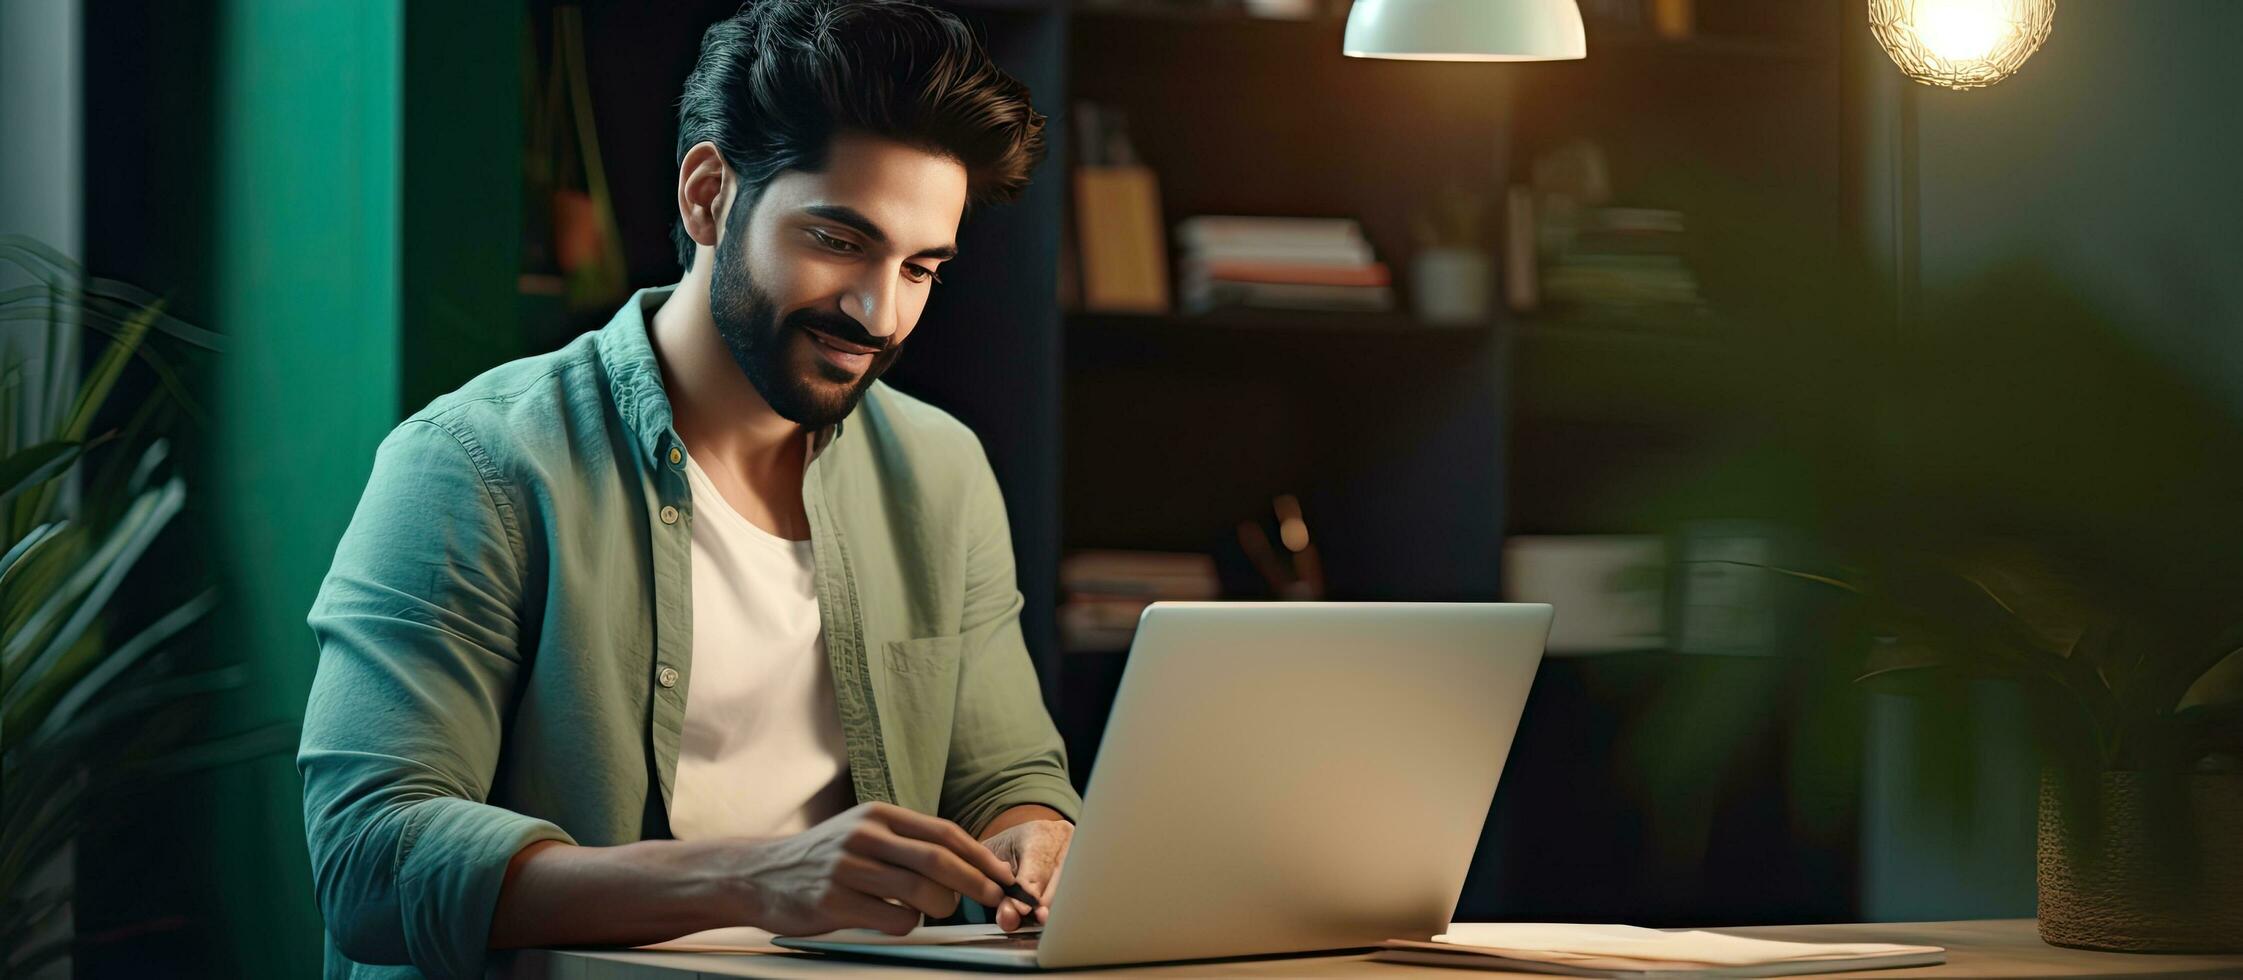 Indian man using digital tablet at home office browsing internet on modern gadget enjoying new app photo